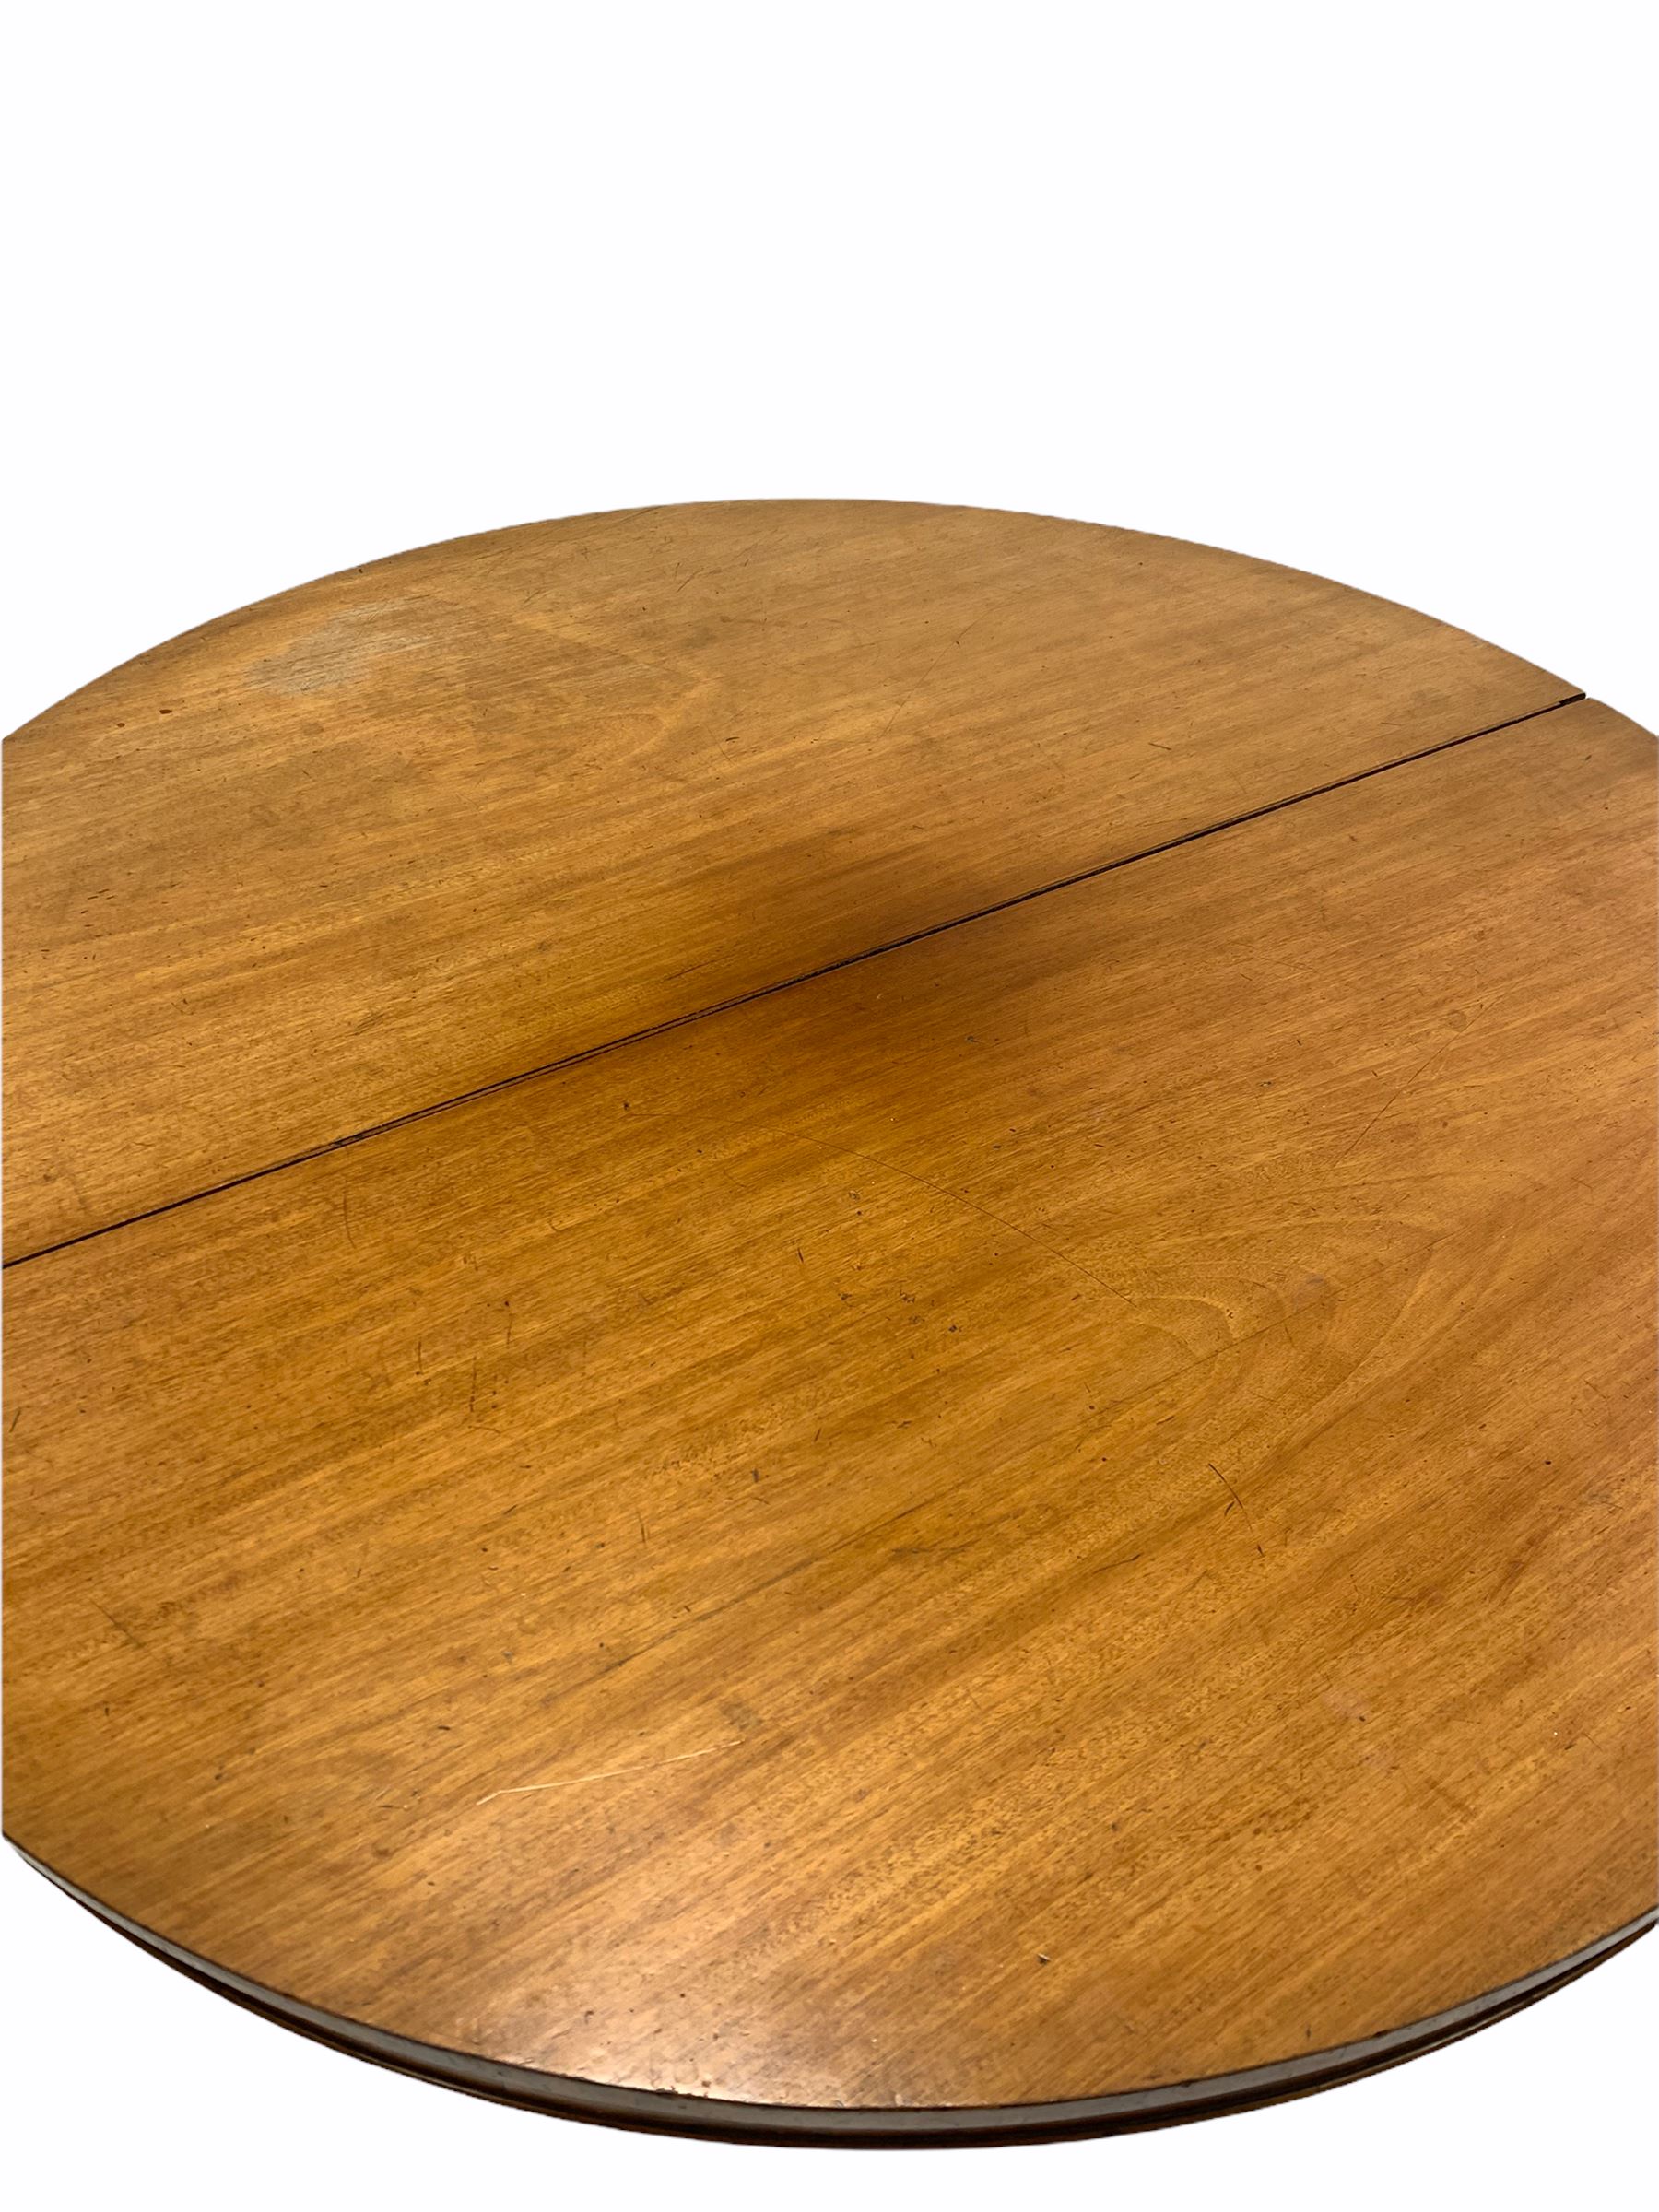 Victorian mahogany circular breakfast table - Image 3 of 3